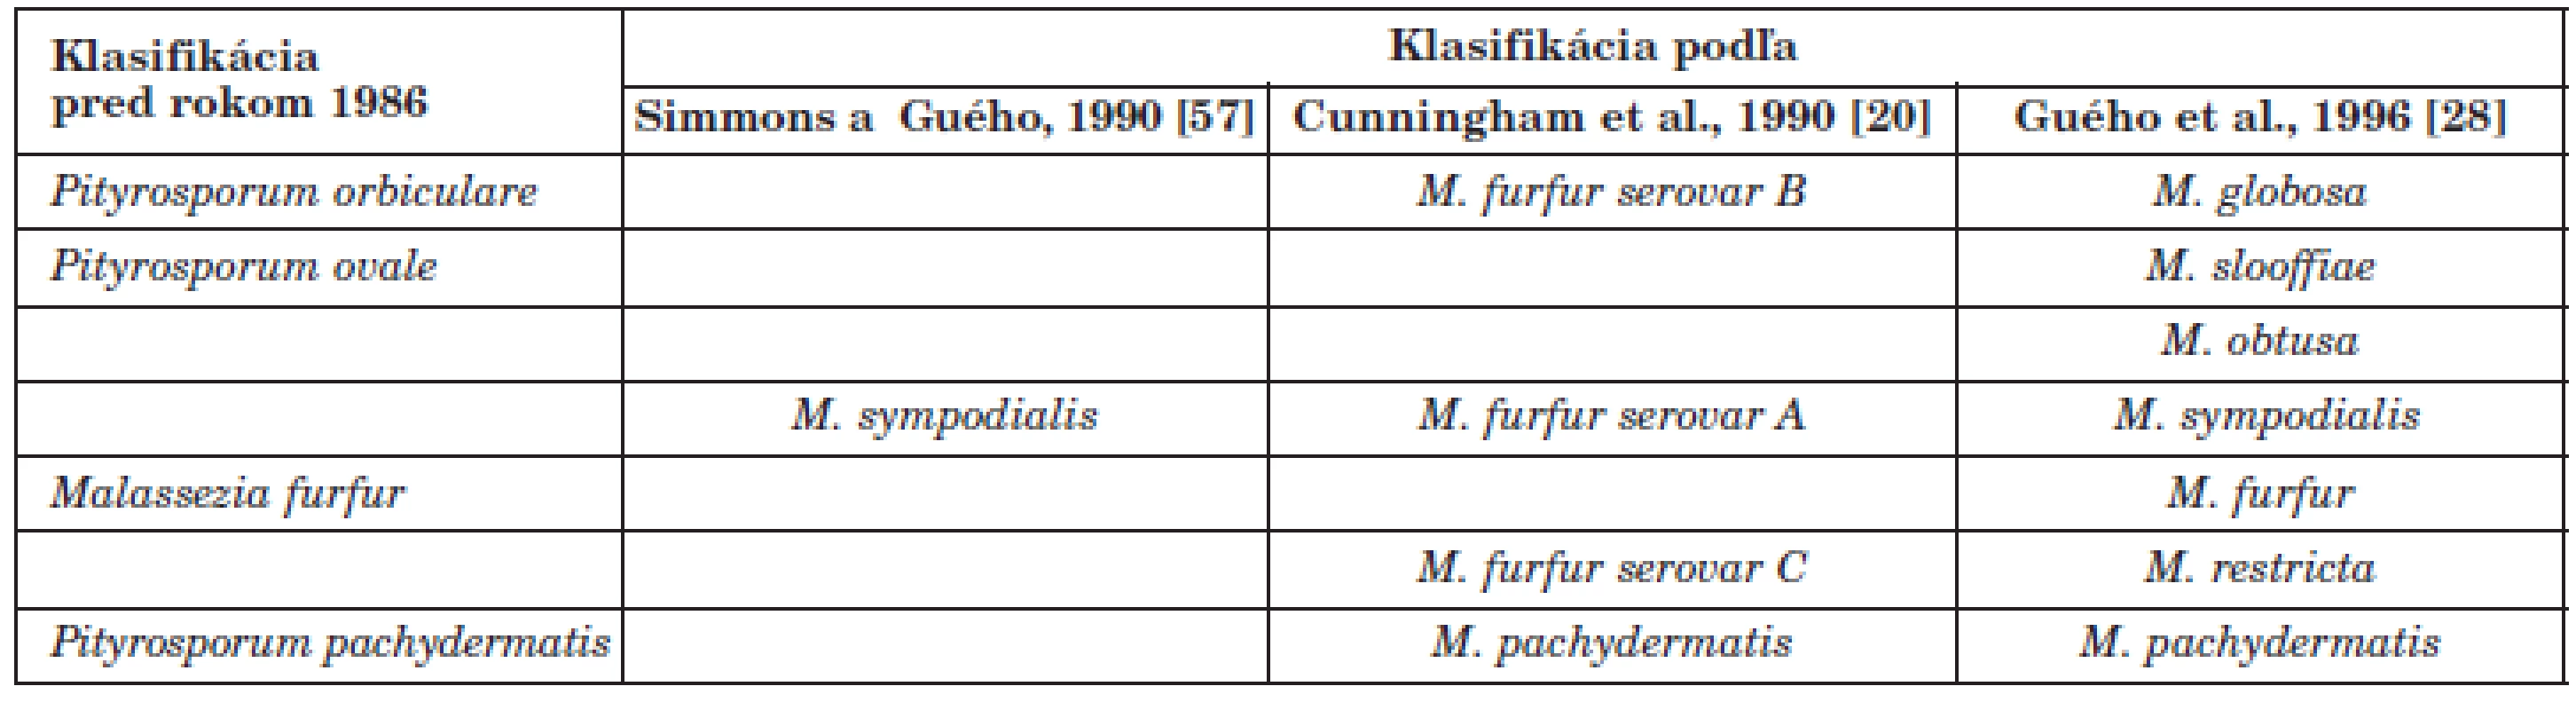 Vývoj klasifikácie kvasiniek rodu Malassezia (podľa [2])
Table 1. Evolution of the classification of Malassezia yeasts (adapted from [2])